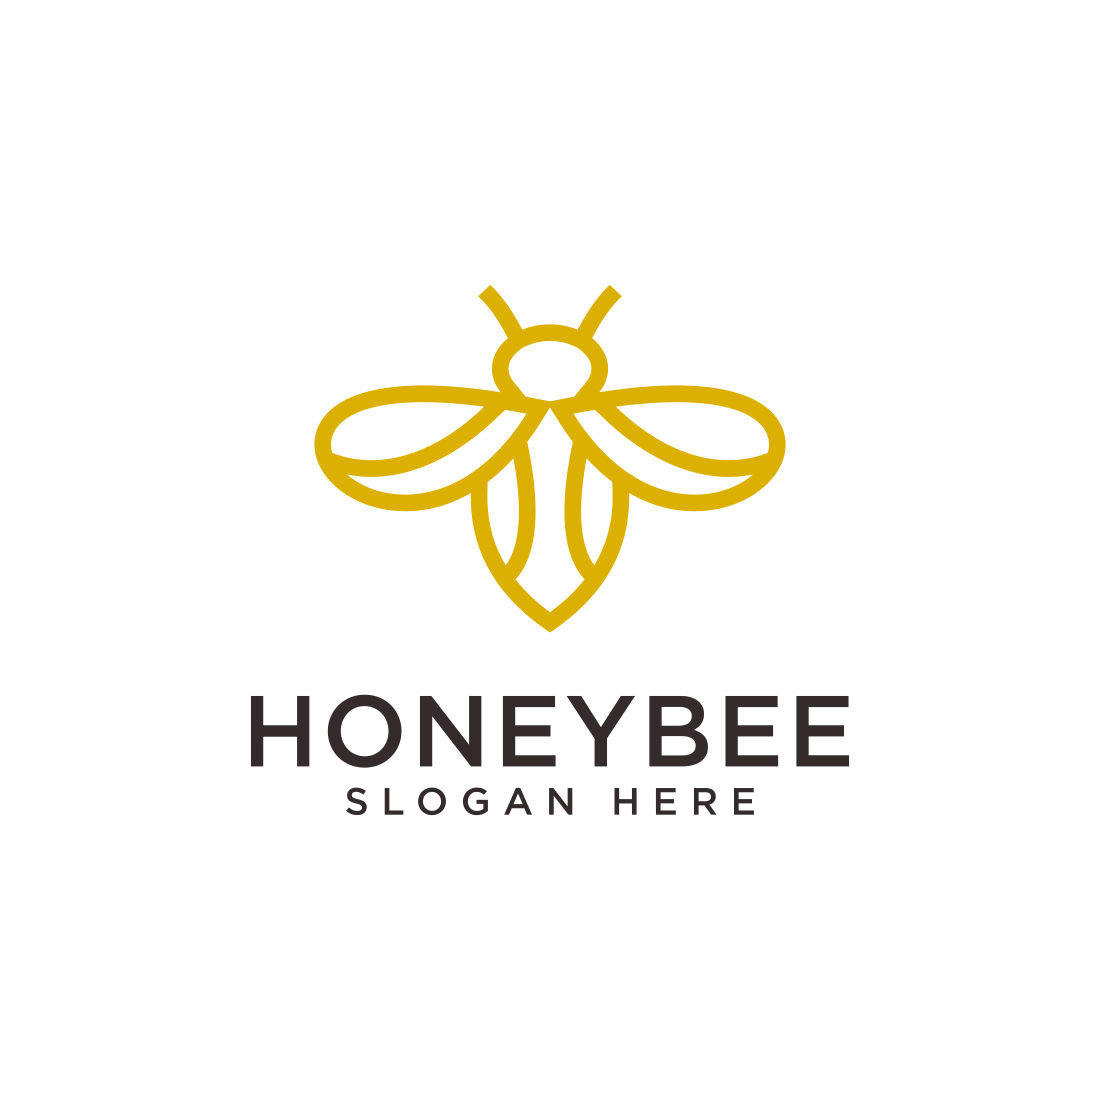 henoy bee logo design vector preview image.